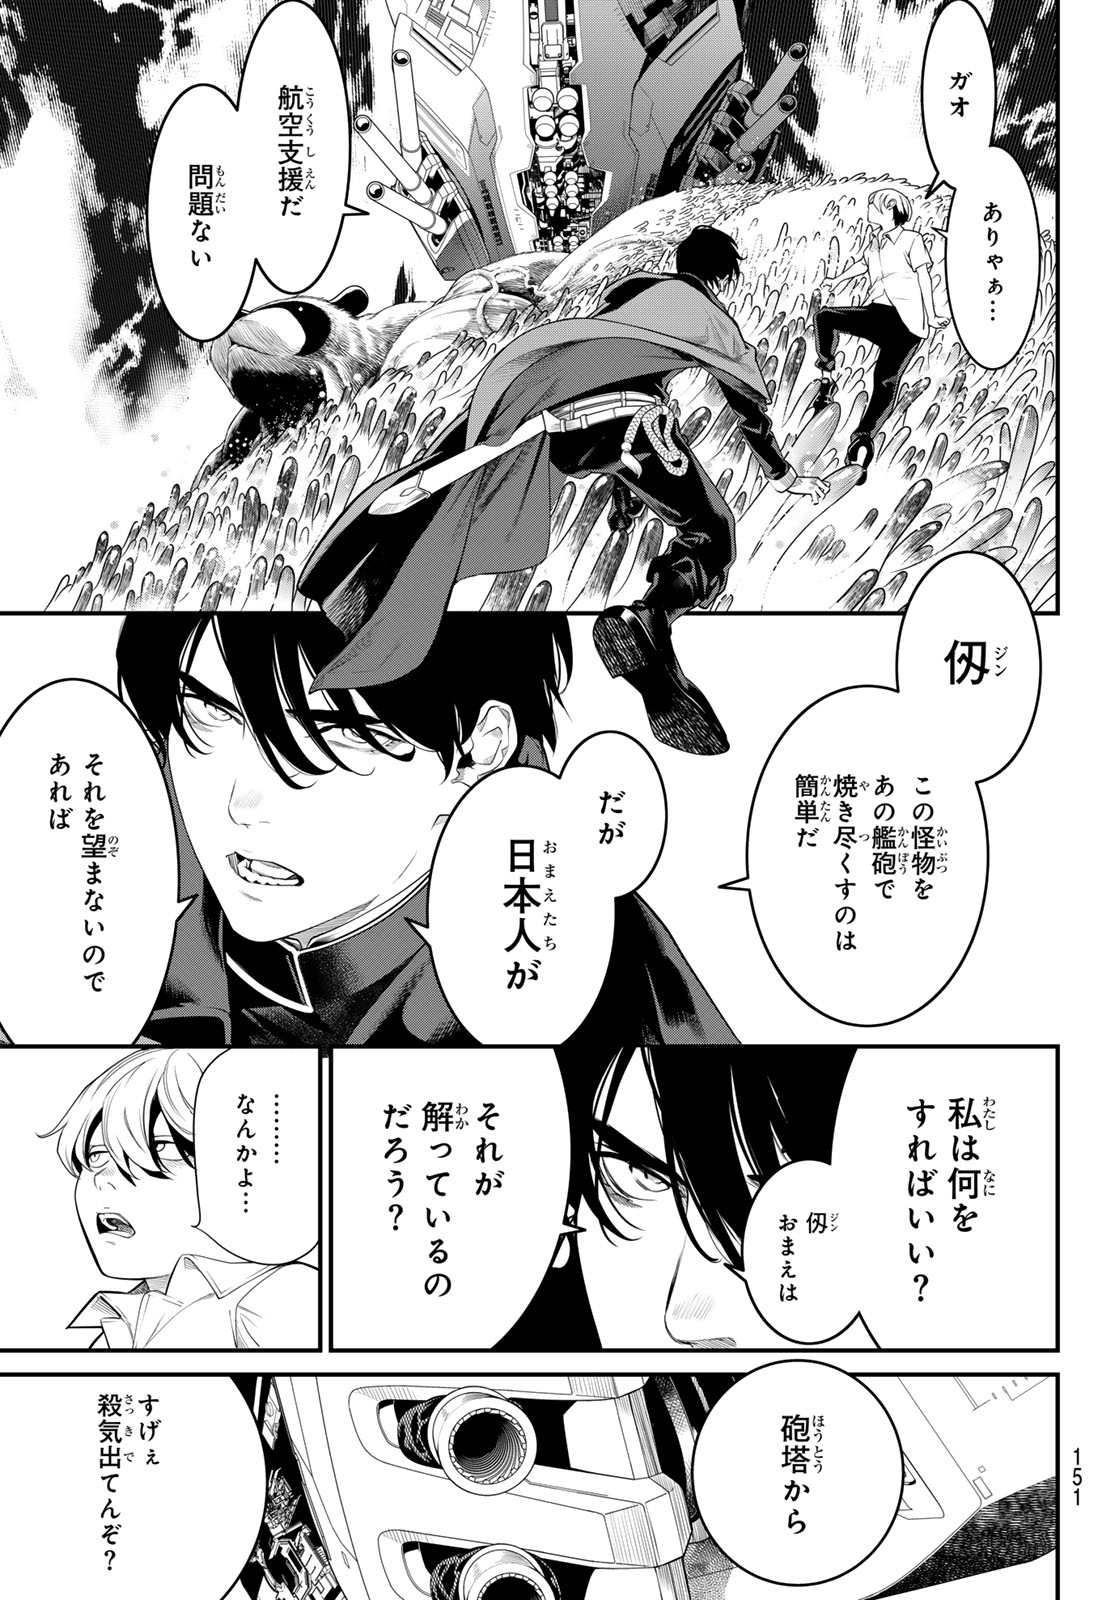 Kaijin Fugeki - Chapter 6 - Page 6